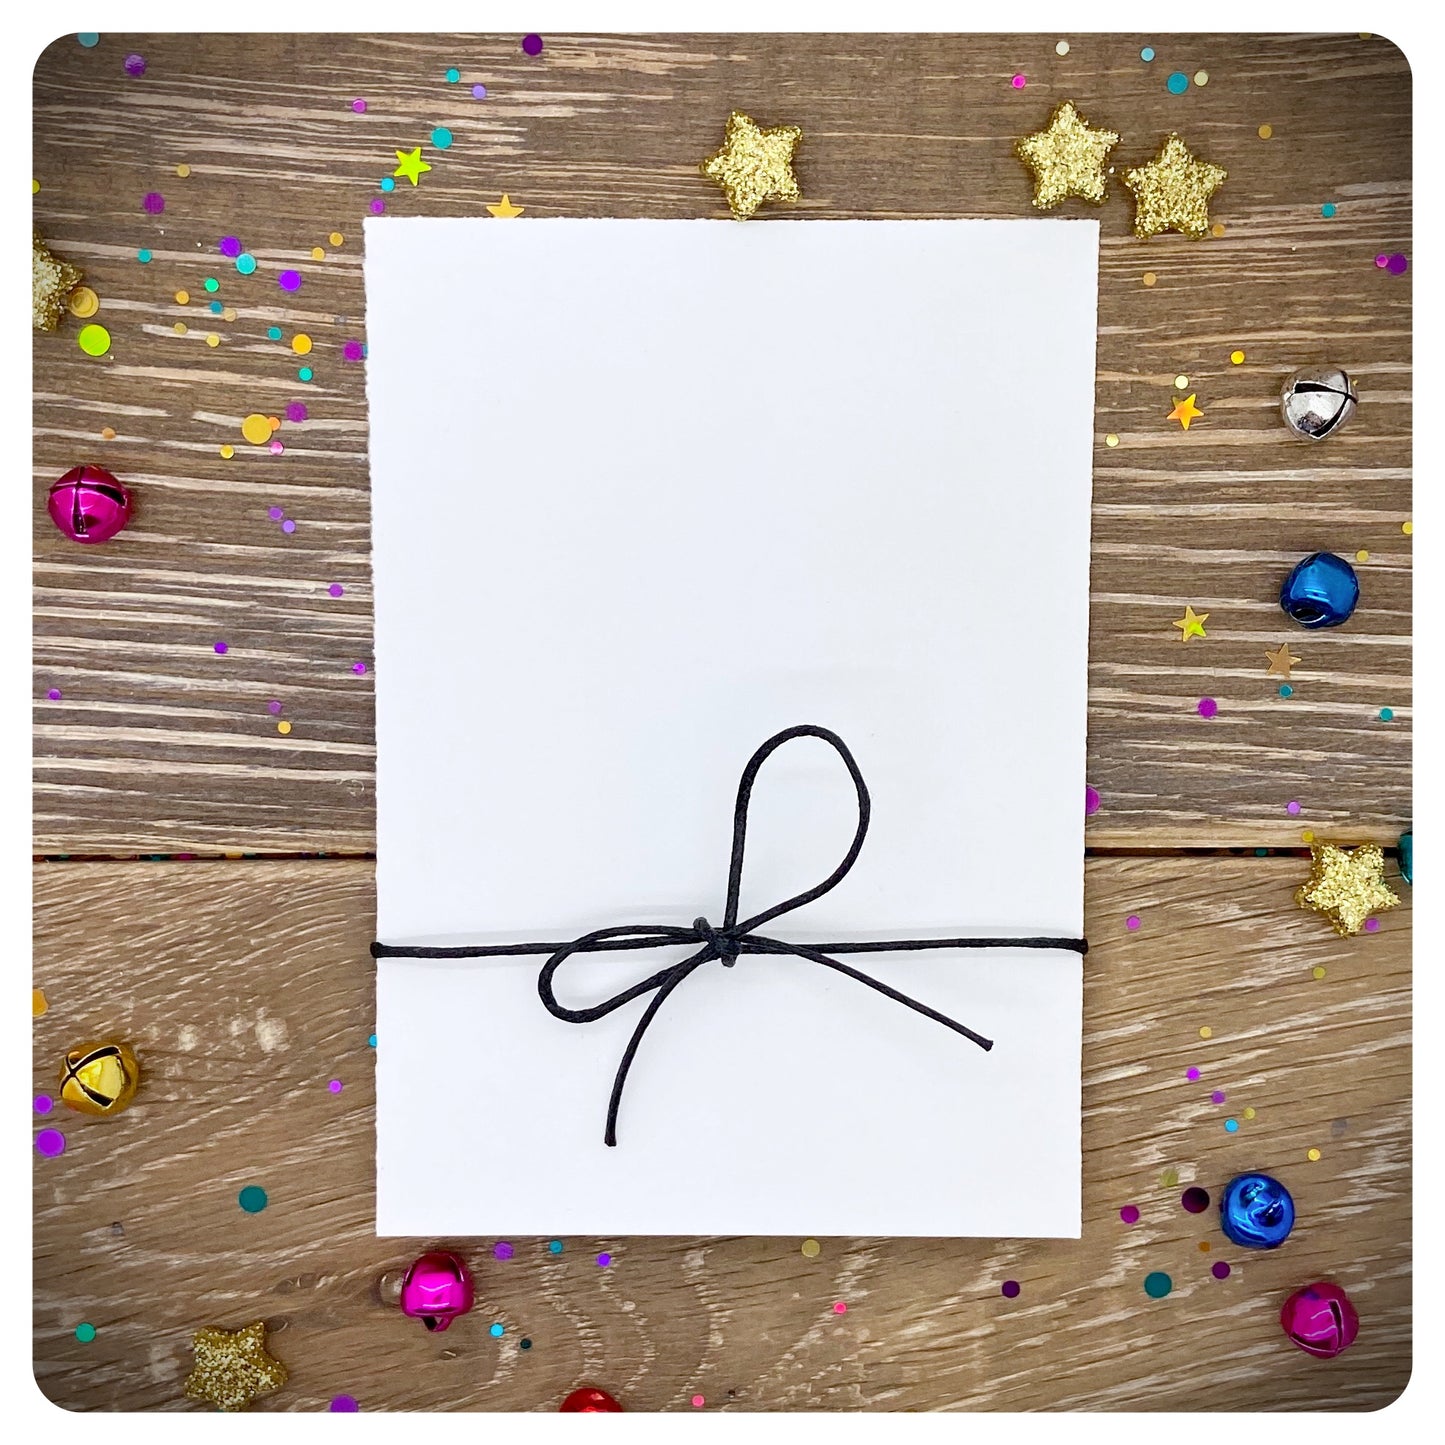 Christmas Dictionary Definition, Christmas Definition Wish Card, Stocking Filler, Secret Santa gift